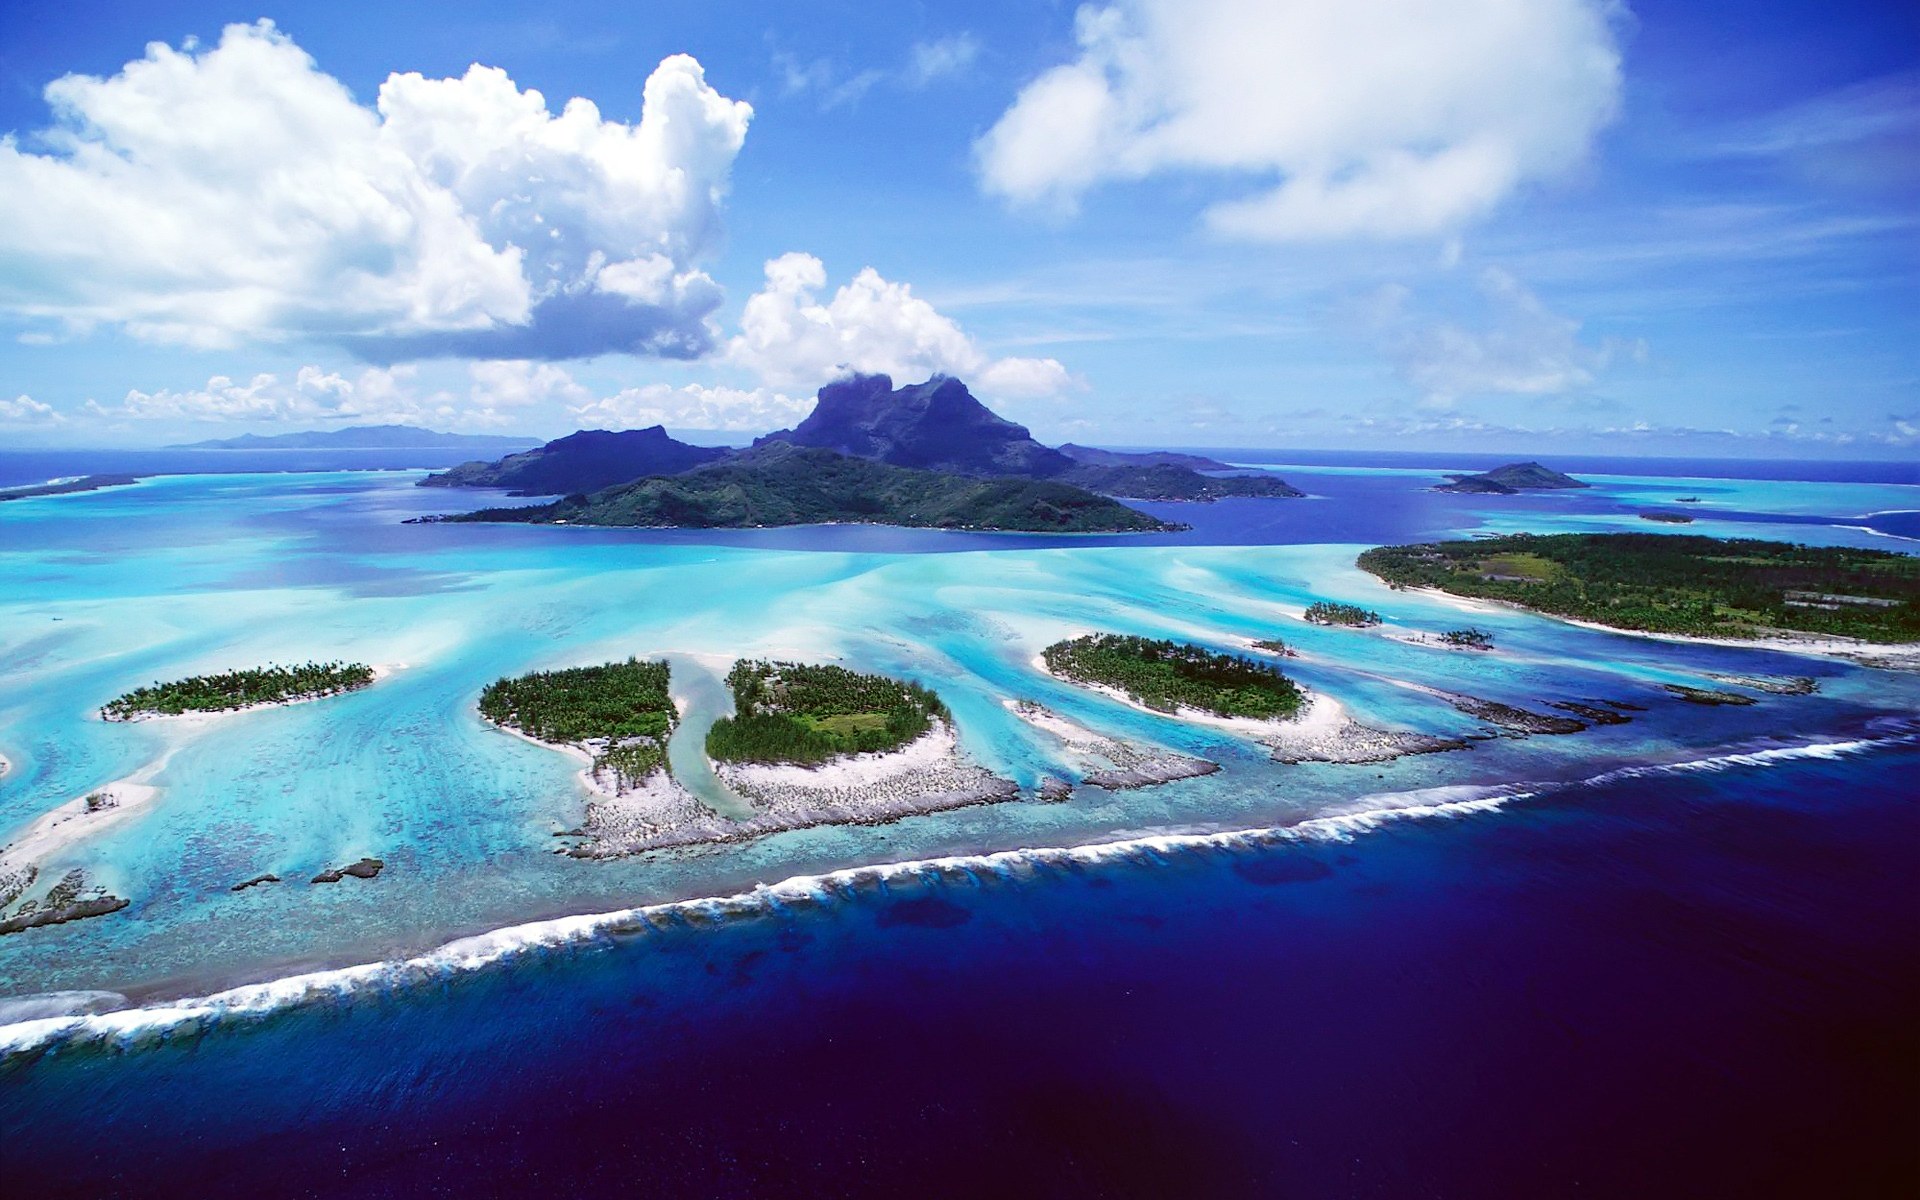 landscapes, nature, paradise, islands, oceans, blue skies - desktop wallpaper